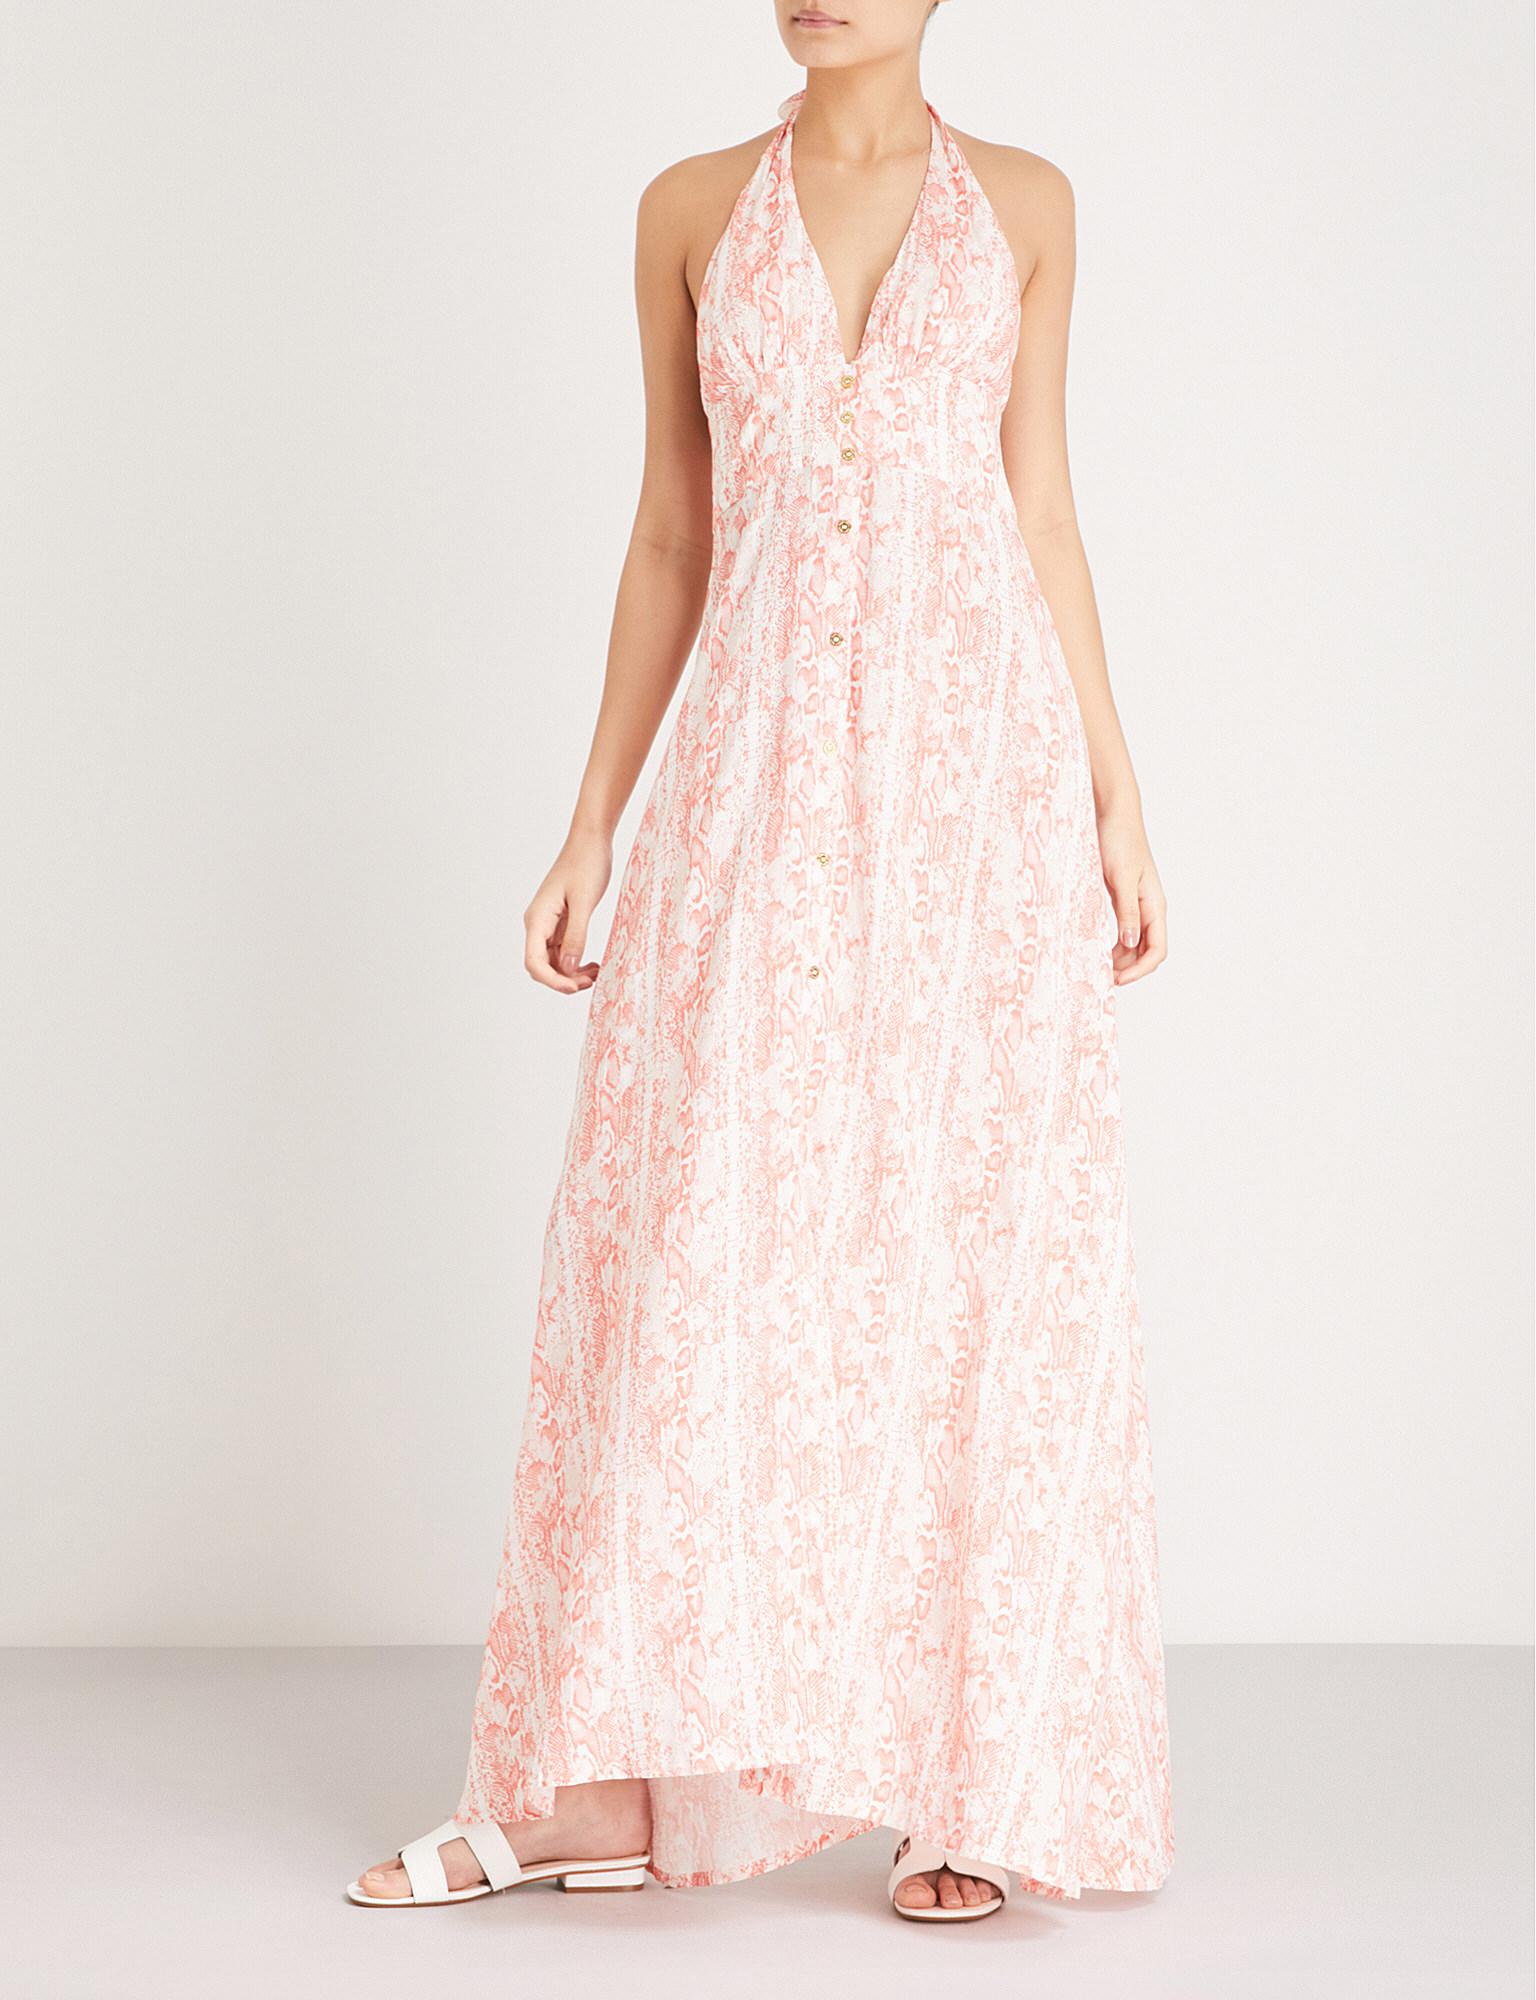 Heidi Klein Montserrat Woven Maxi Dress in Print (Pink) - Lyst